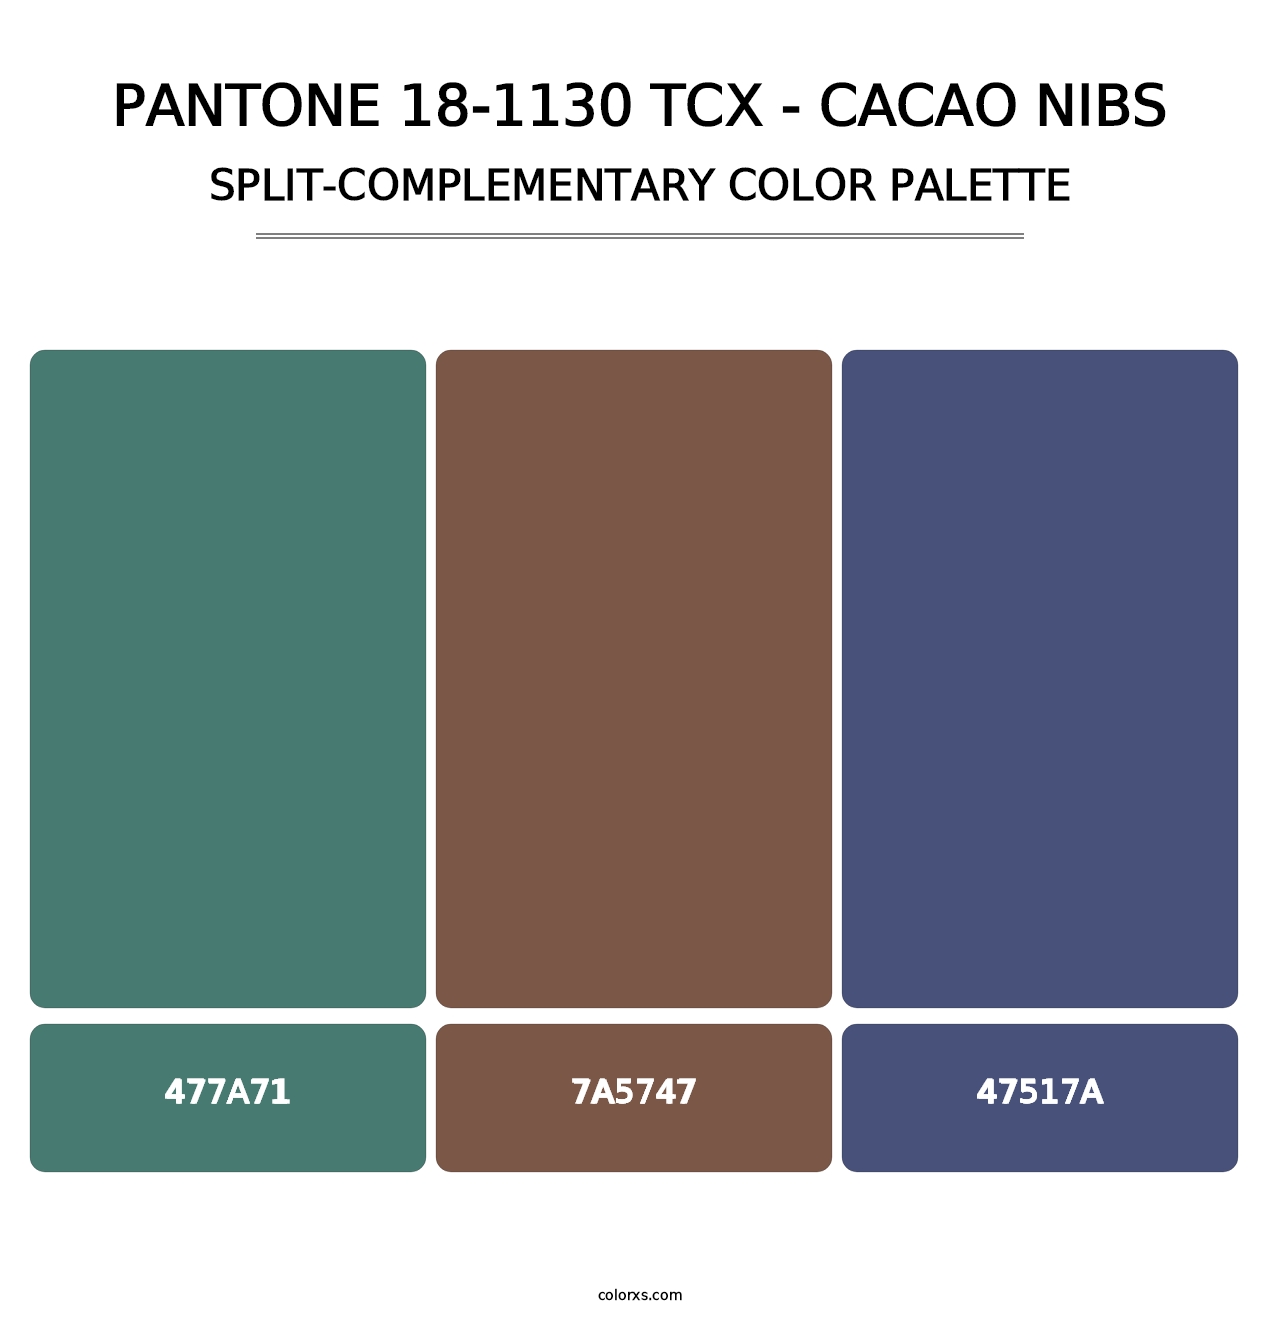 PANTONE 18-1130 TCX - Cacao Nibs - Split-Complementary Color Palette